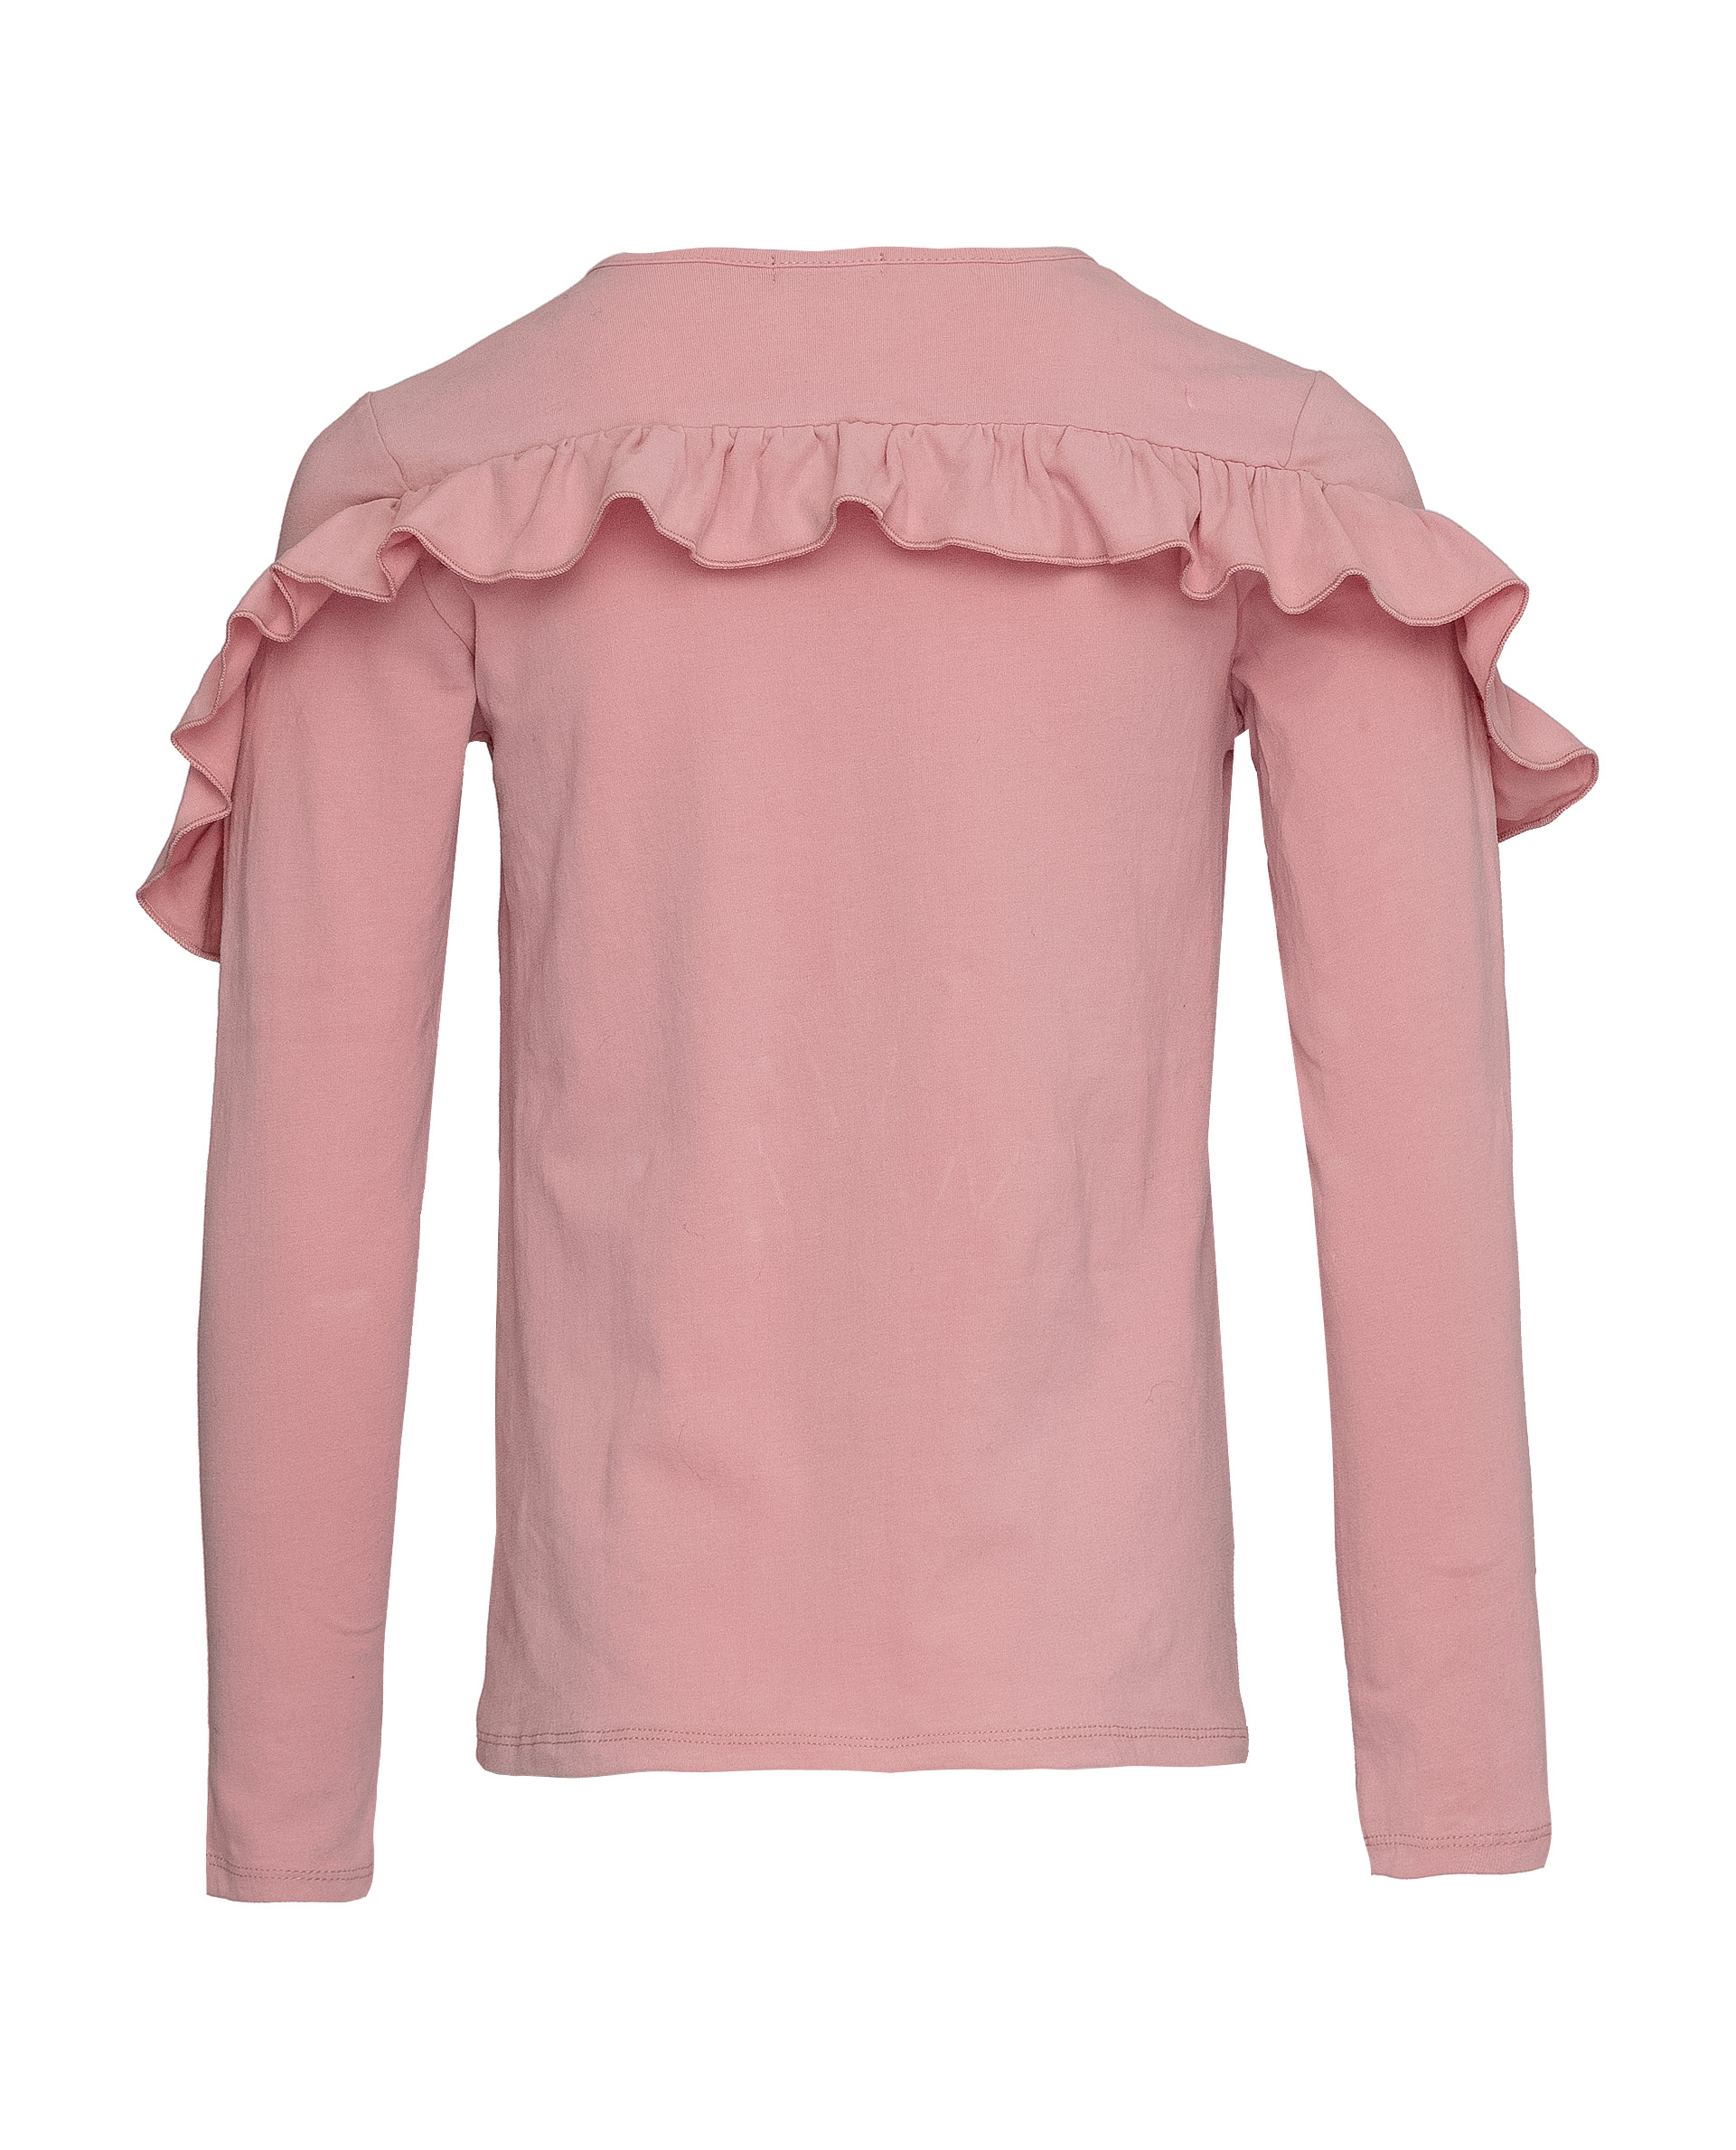 Розовая футболка с длинным рукавом Gulliver 21907GJC1202, размер 164, цвет розовый - фото 3